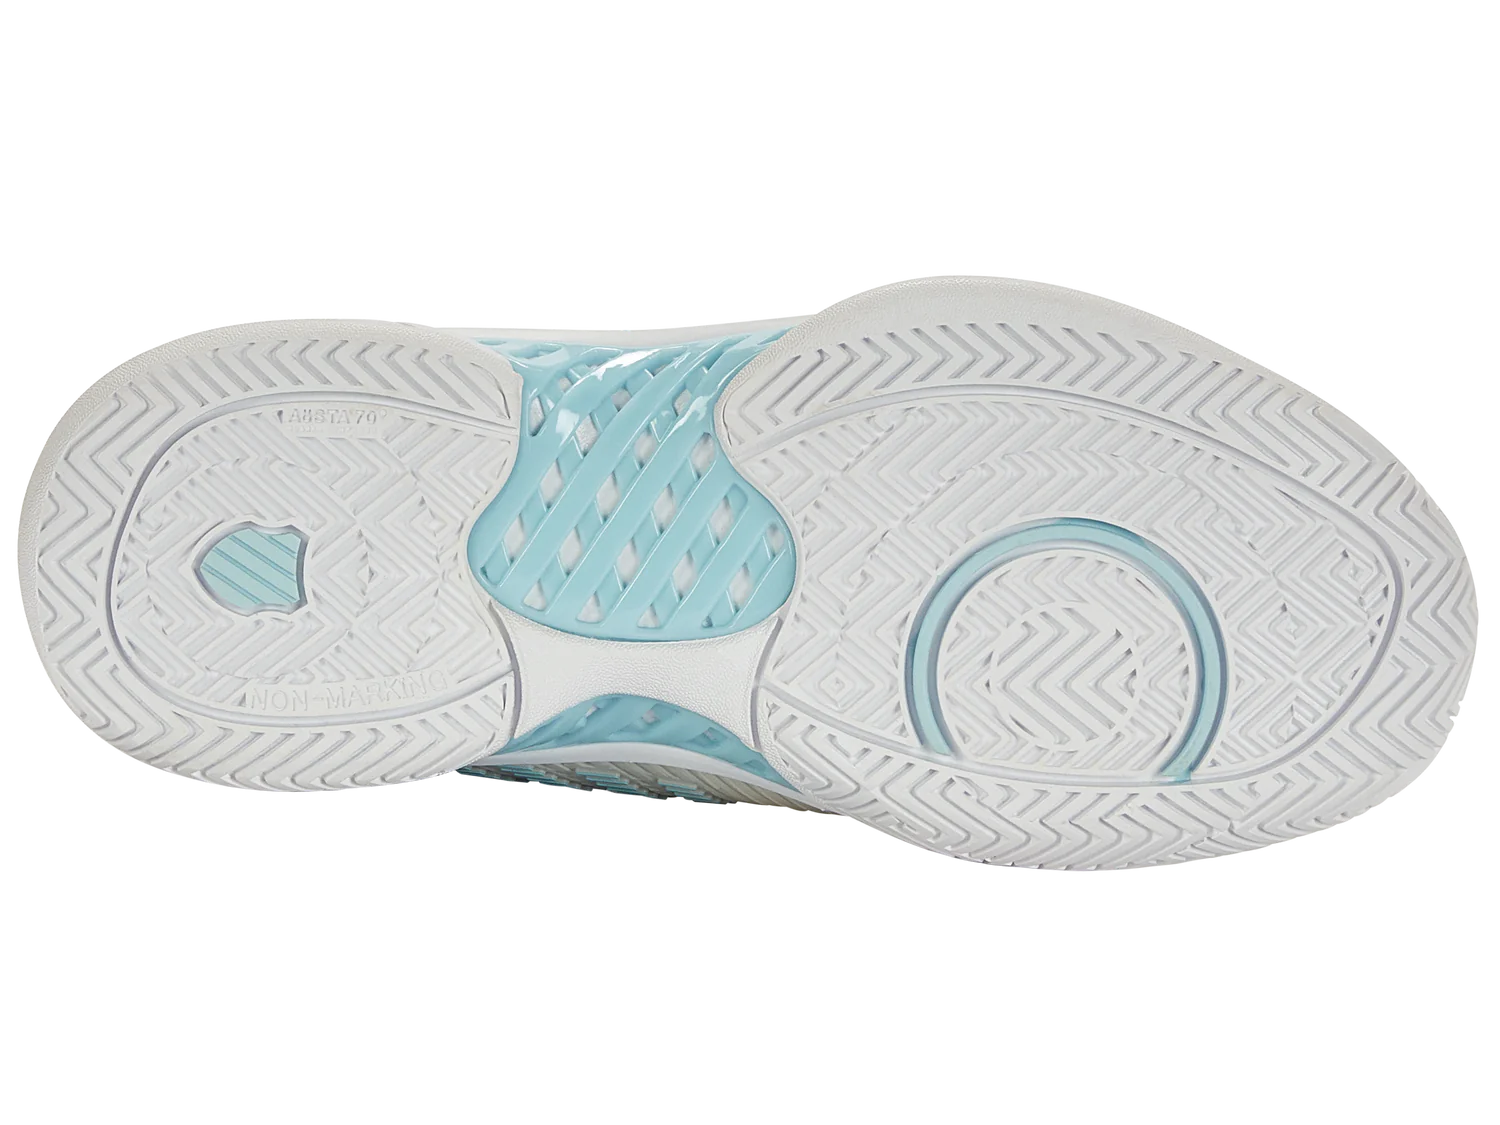 K-Swiss Women's Hypercourt Express 2 Tennis Shoes in Vaporous Gray/White/Blue Glow